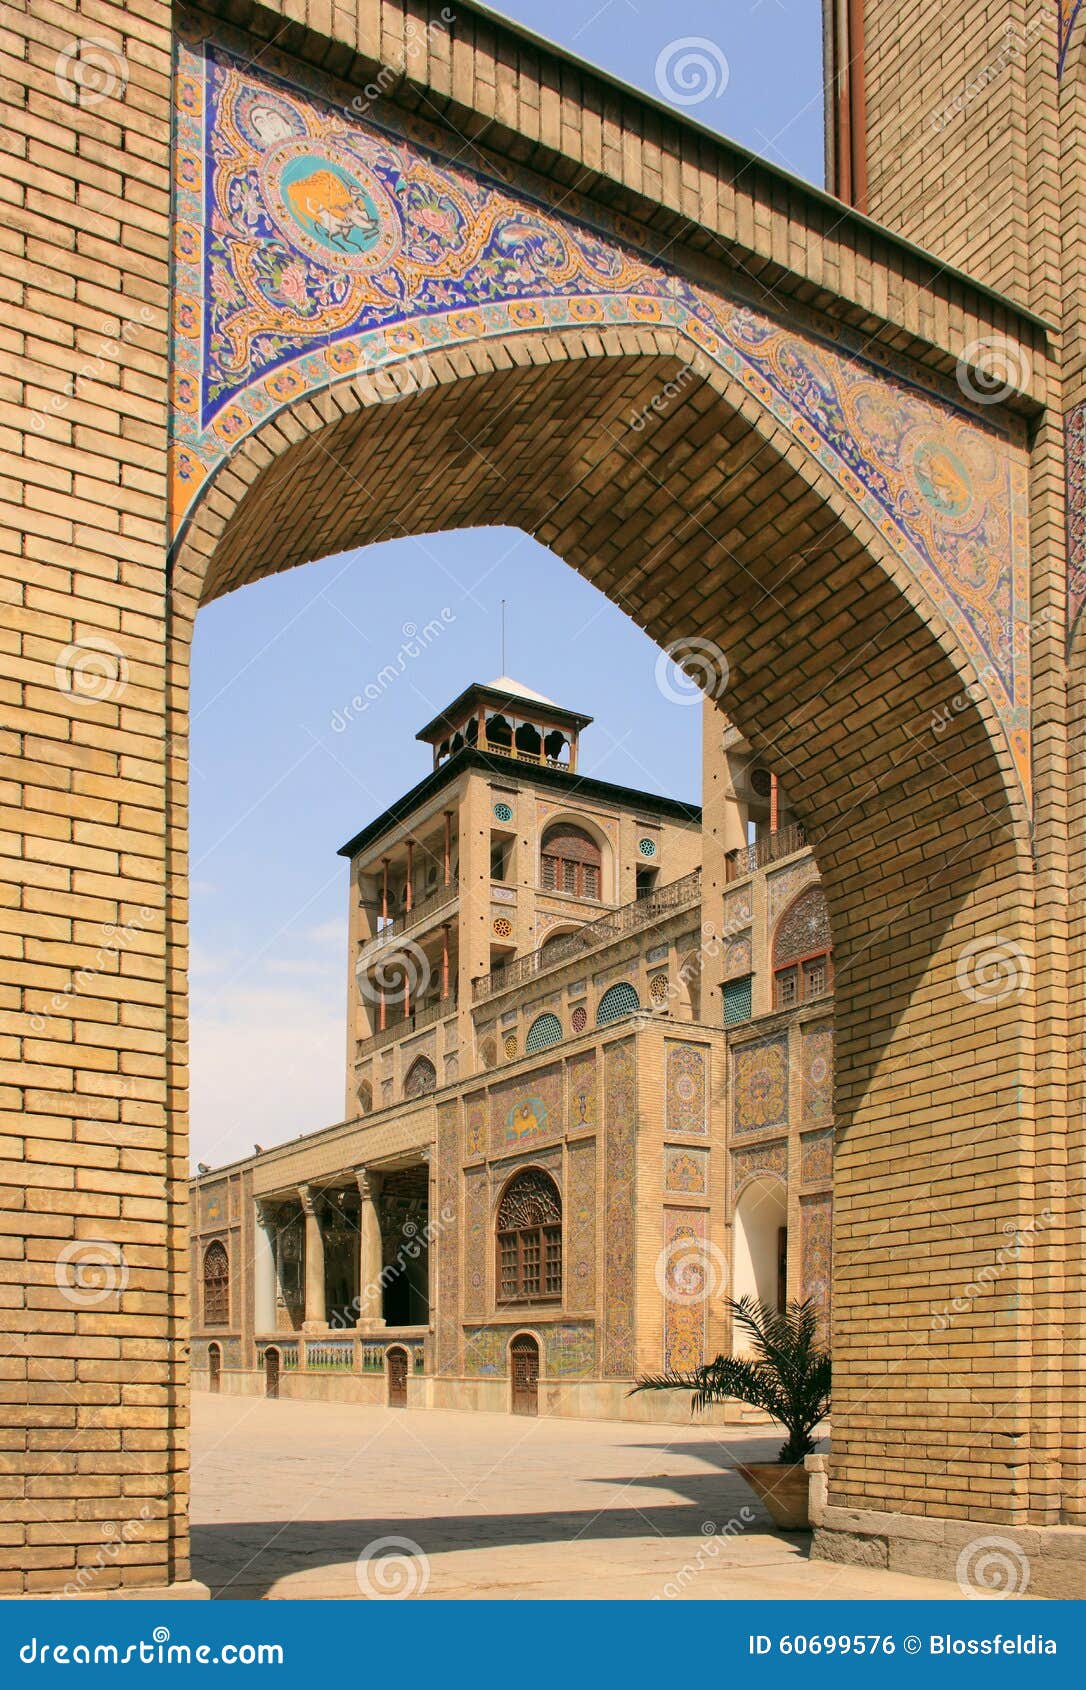 the arch in golestan palace near edifice of the sun (shams ol emareh) in tehran city, iran.